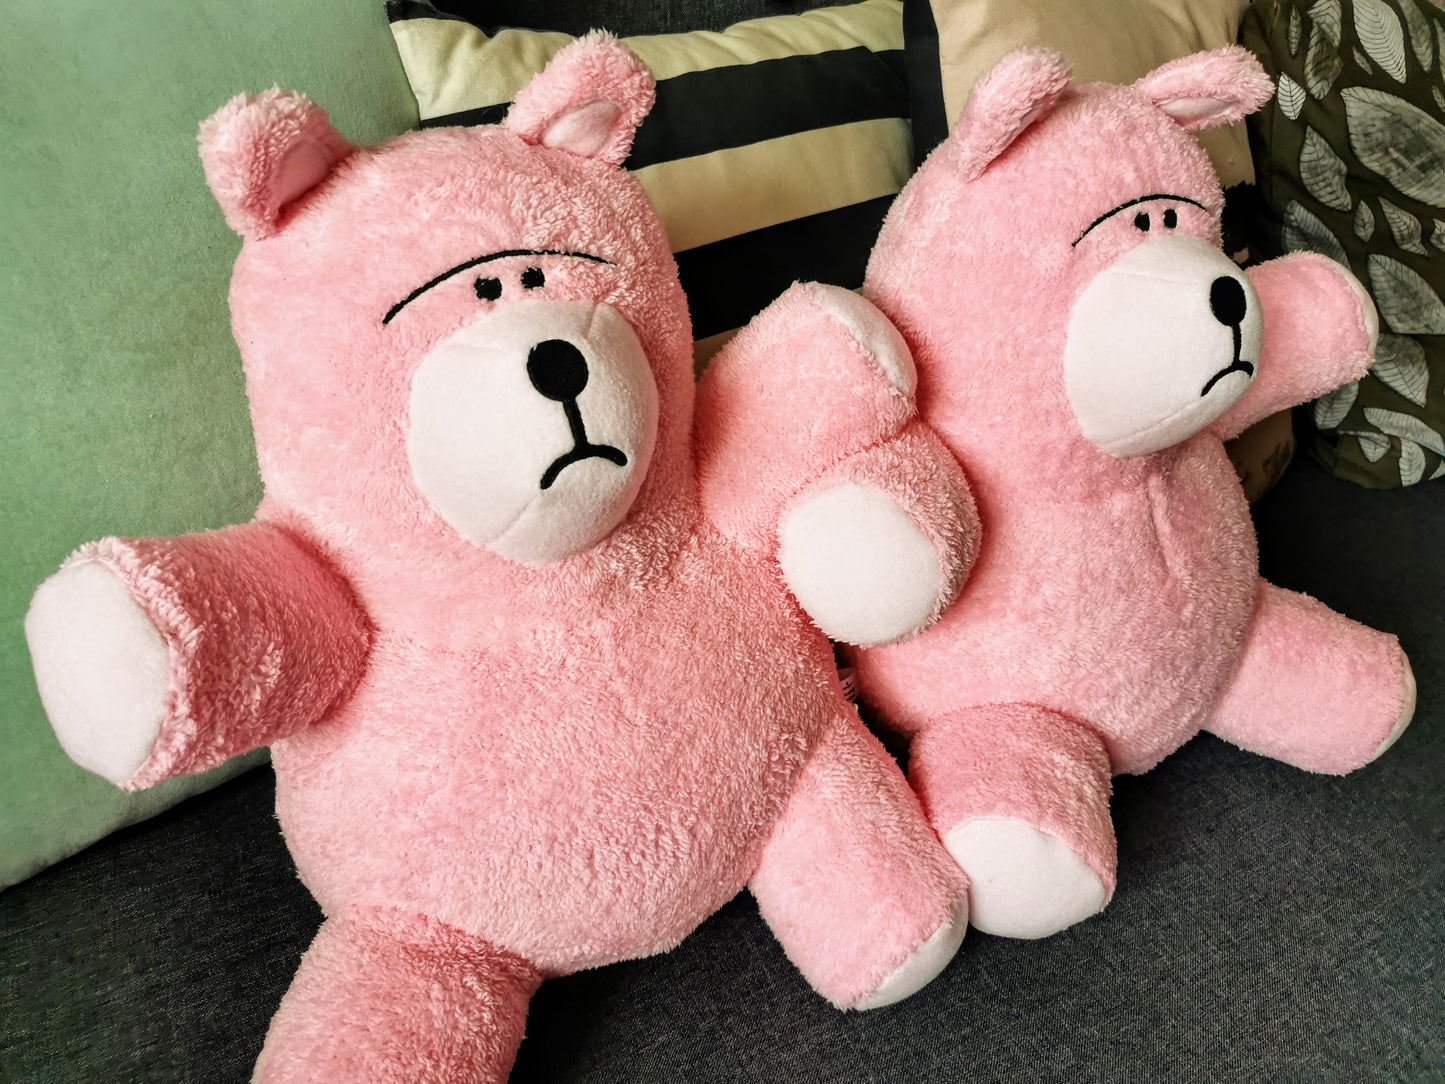 Toy story 1995 pink bear replica plush